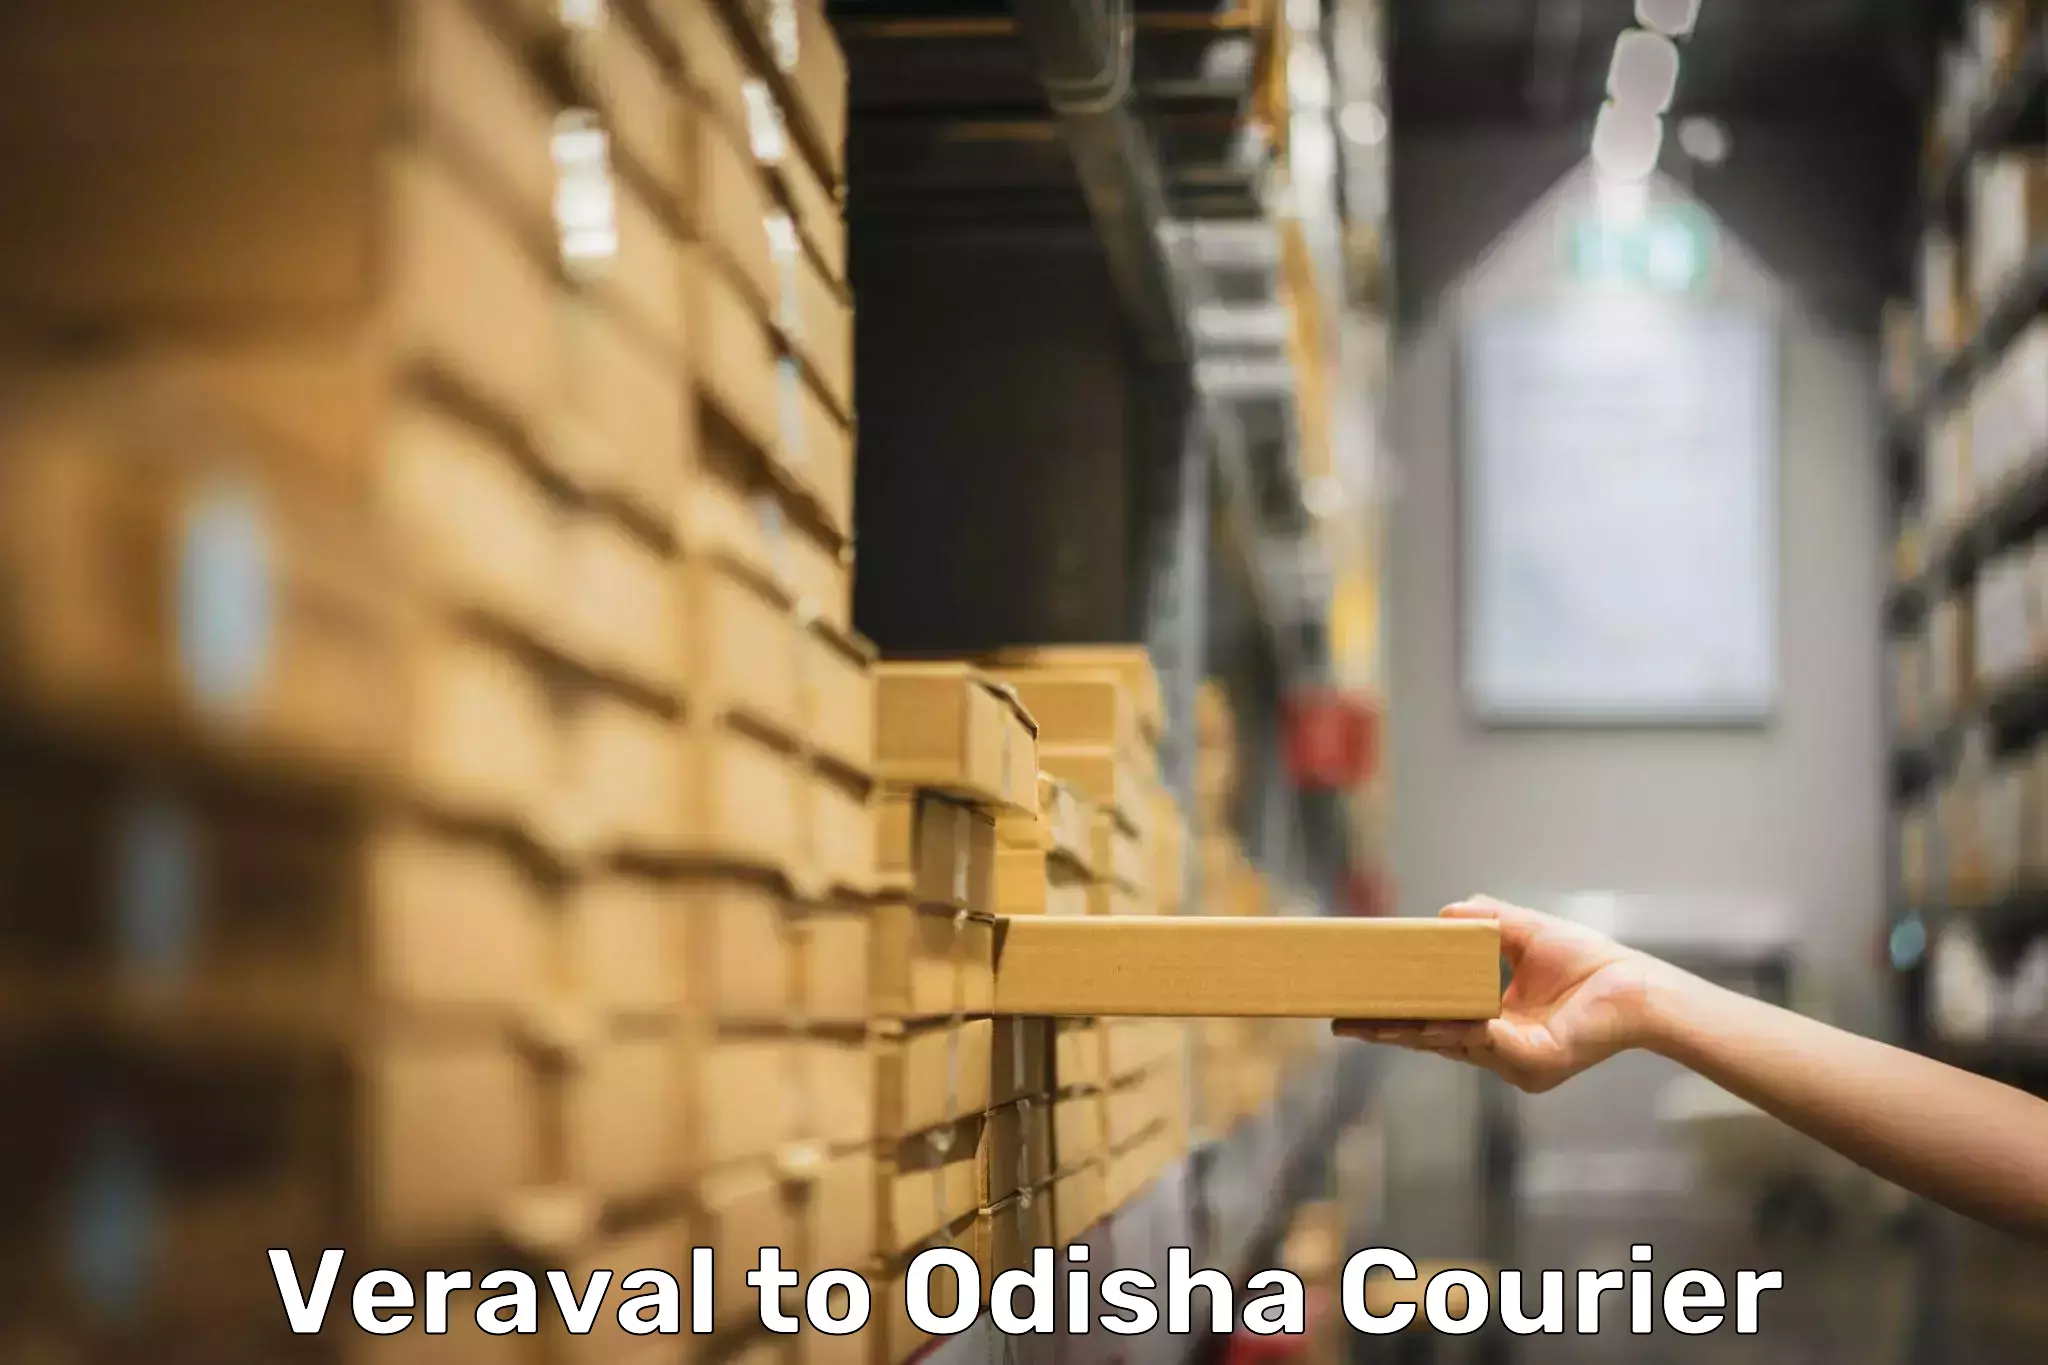 Luggage transport consultancy Veraval to Odisha